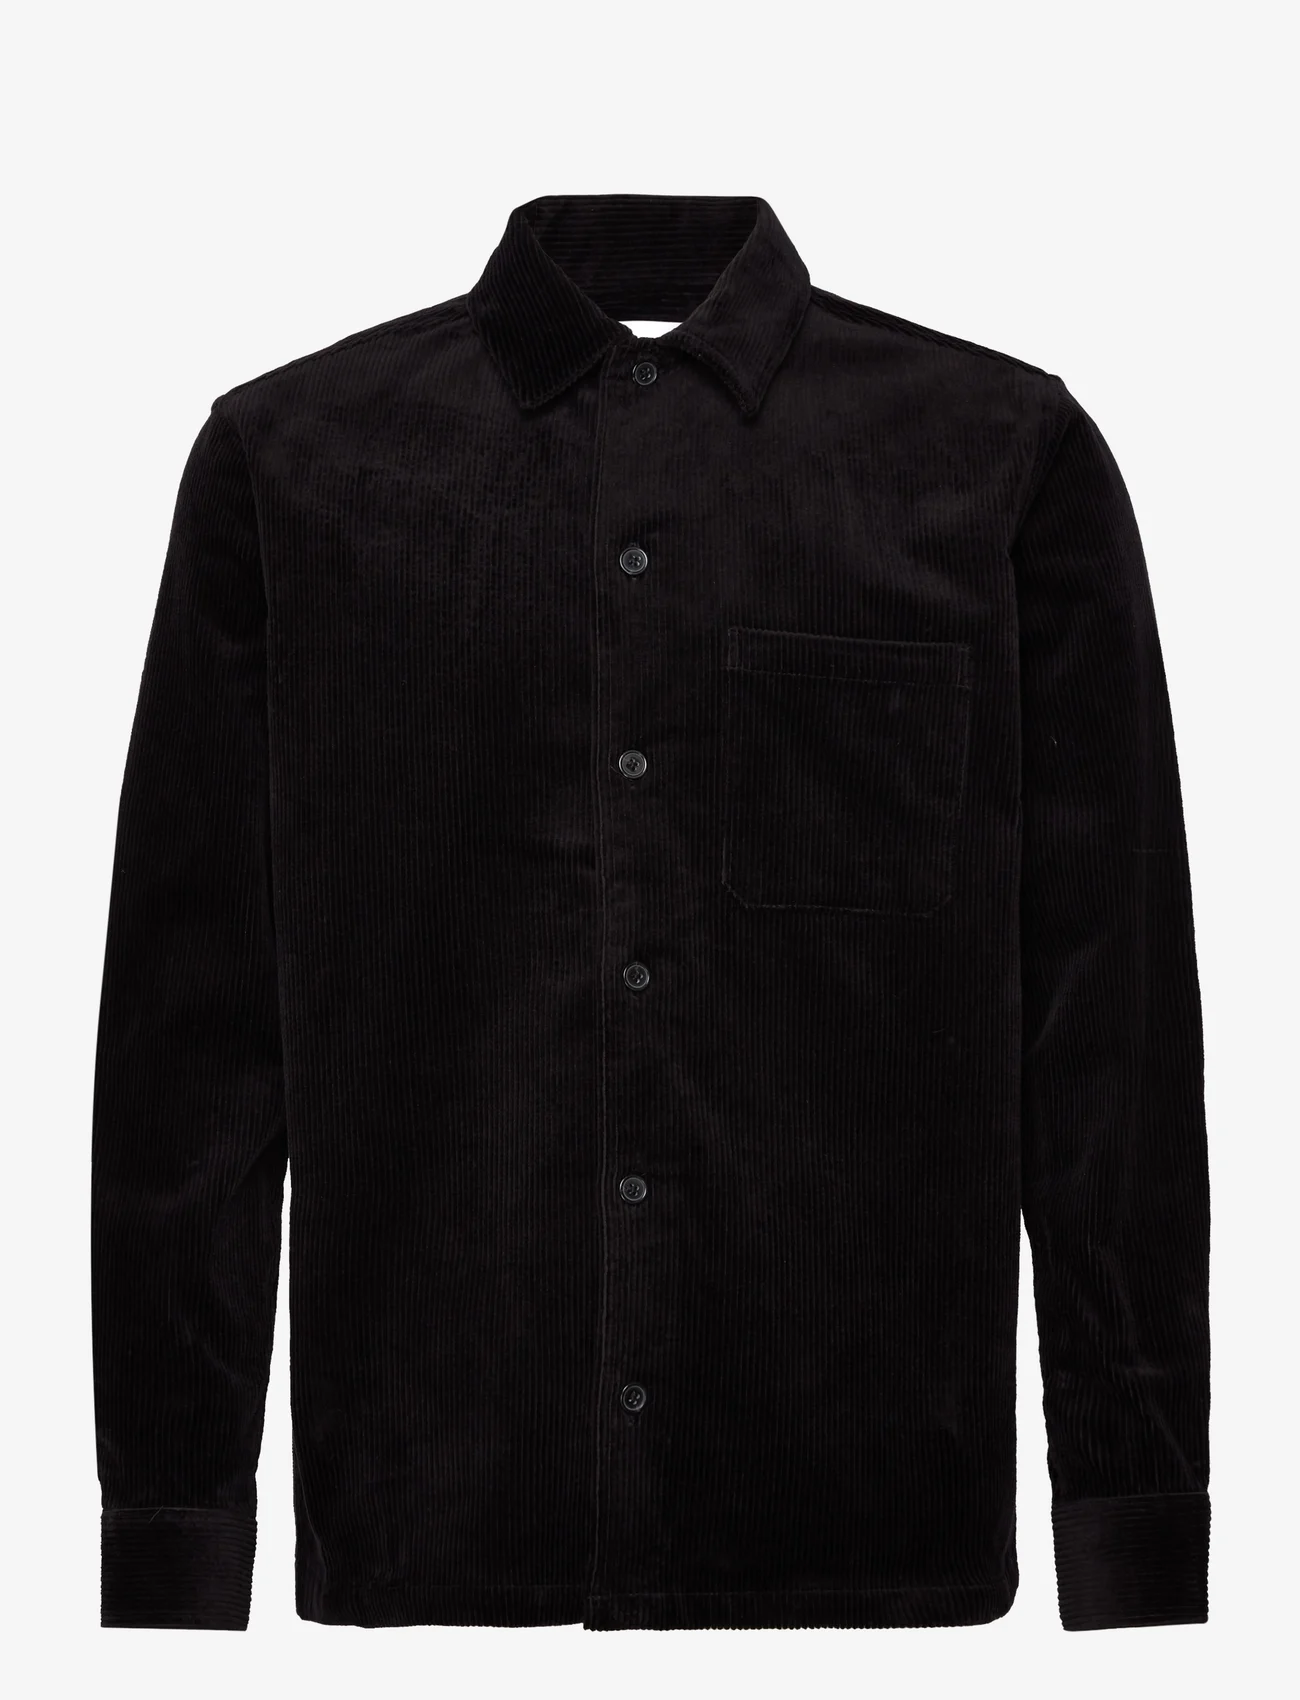 Samsøe Samsøe - Taka JS shirt 11046 - heren - black - 0